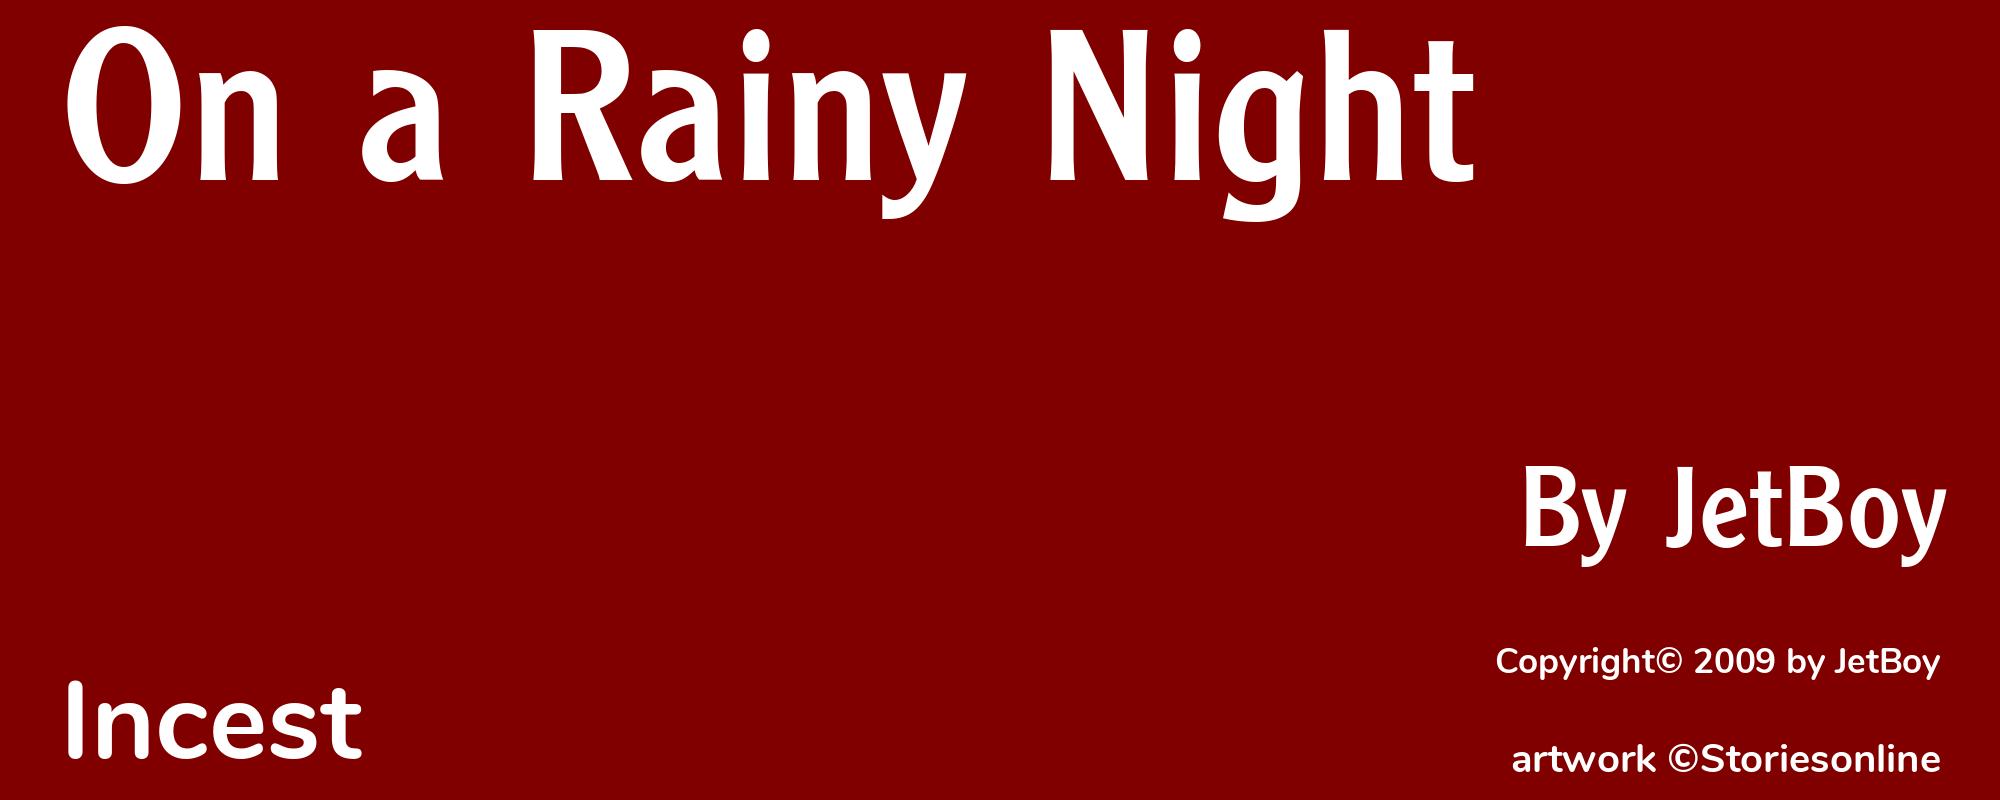 On a Rainy Night - Cover